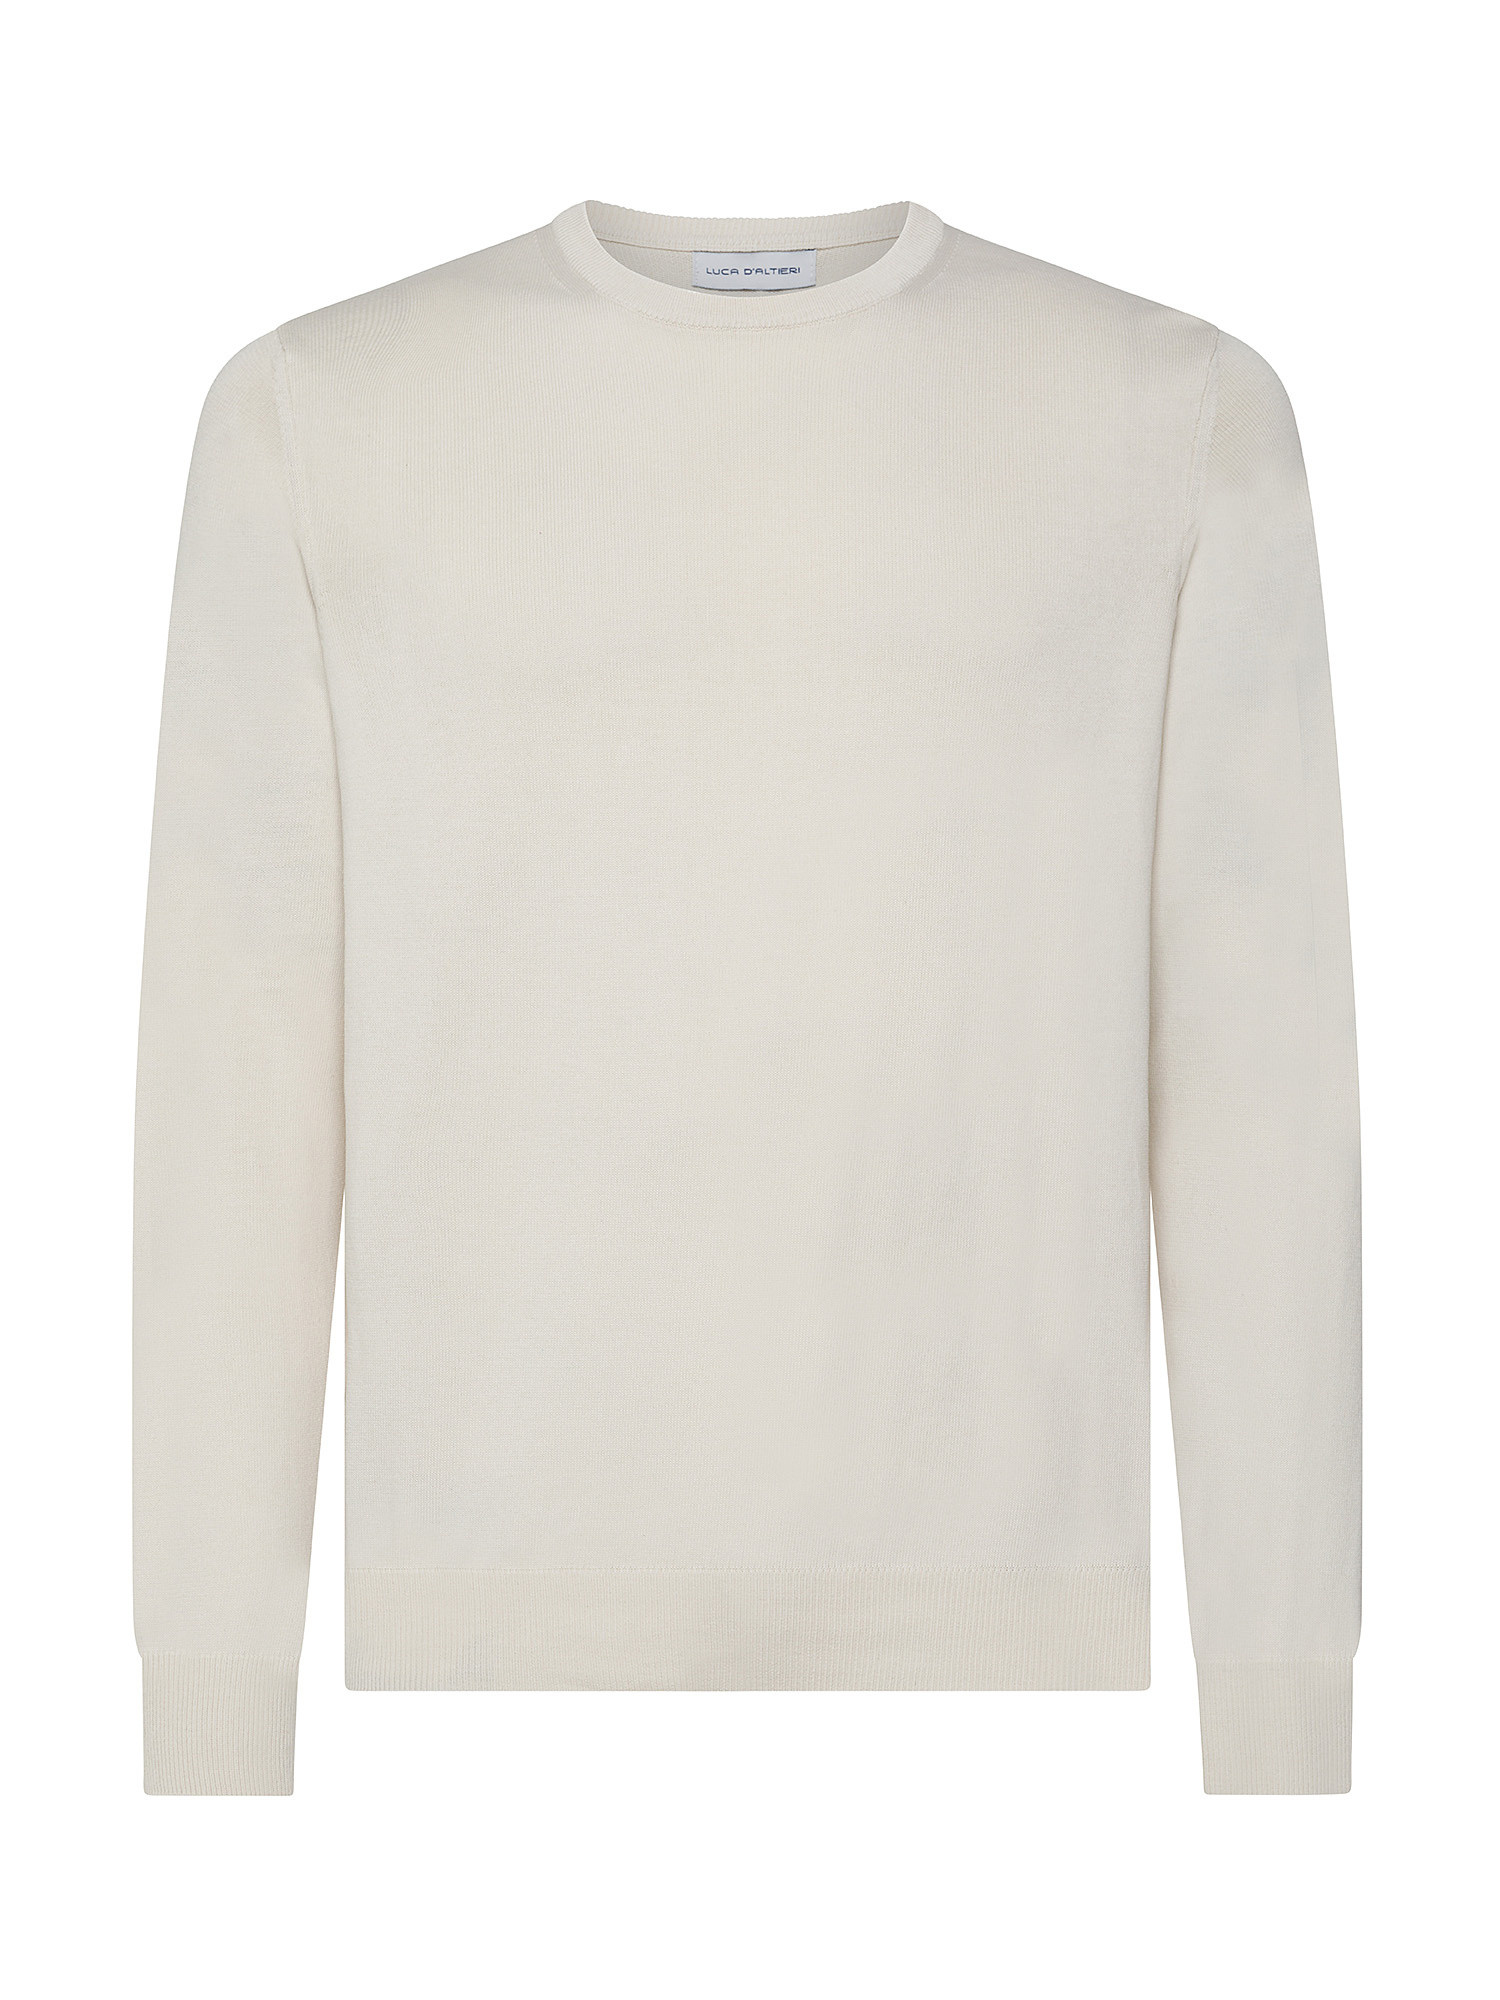 Luca D'Altieri - Crew neck sweater in extrafine pure cotton, White Cream, large image number 0